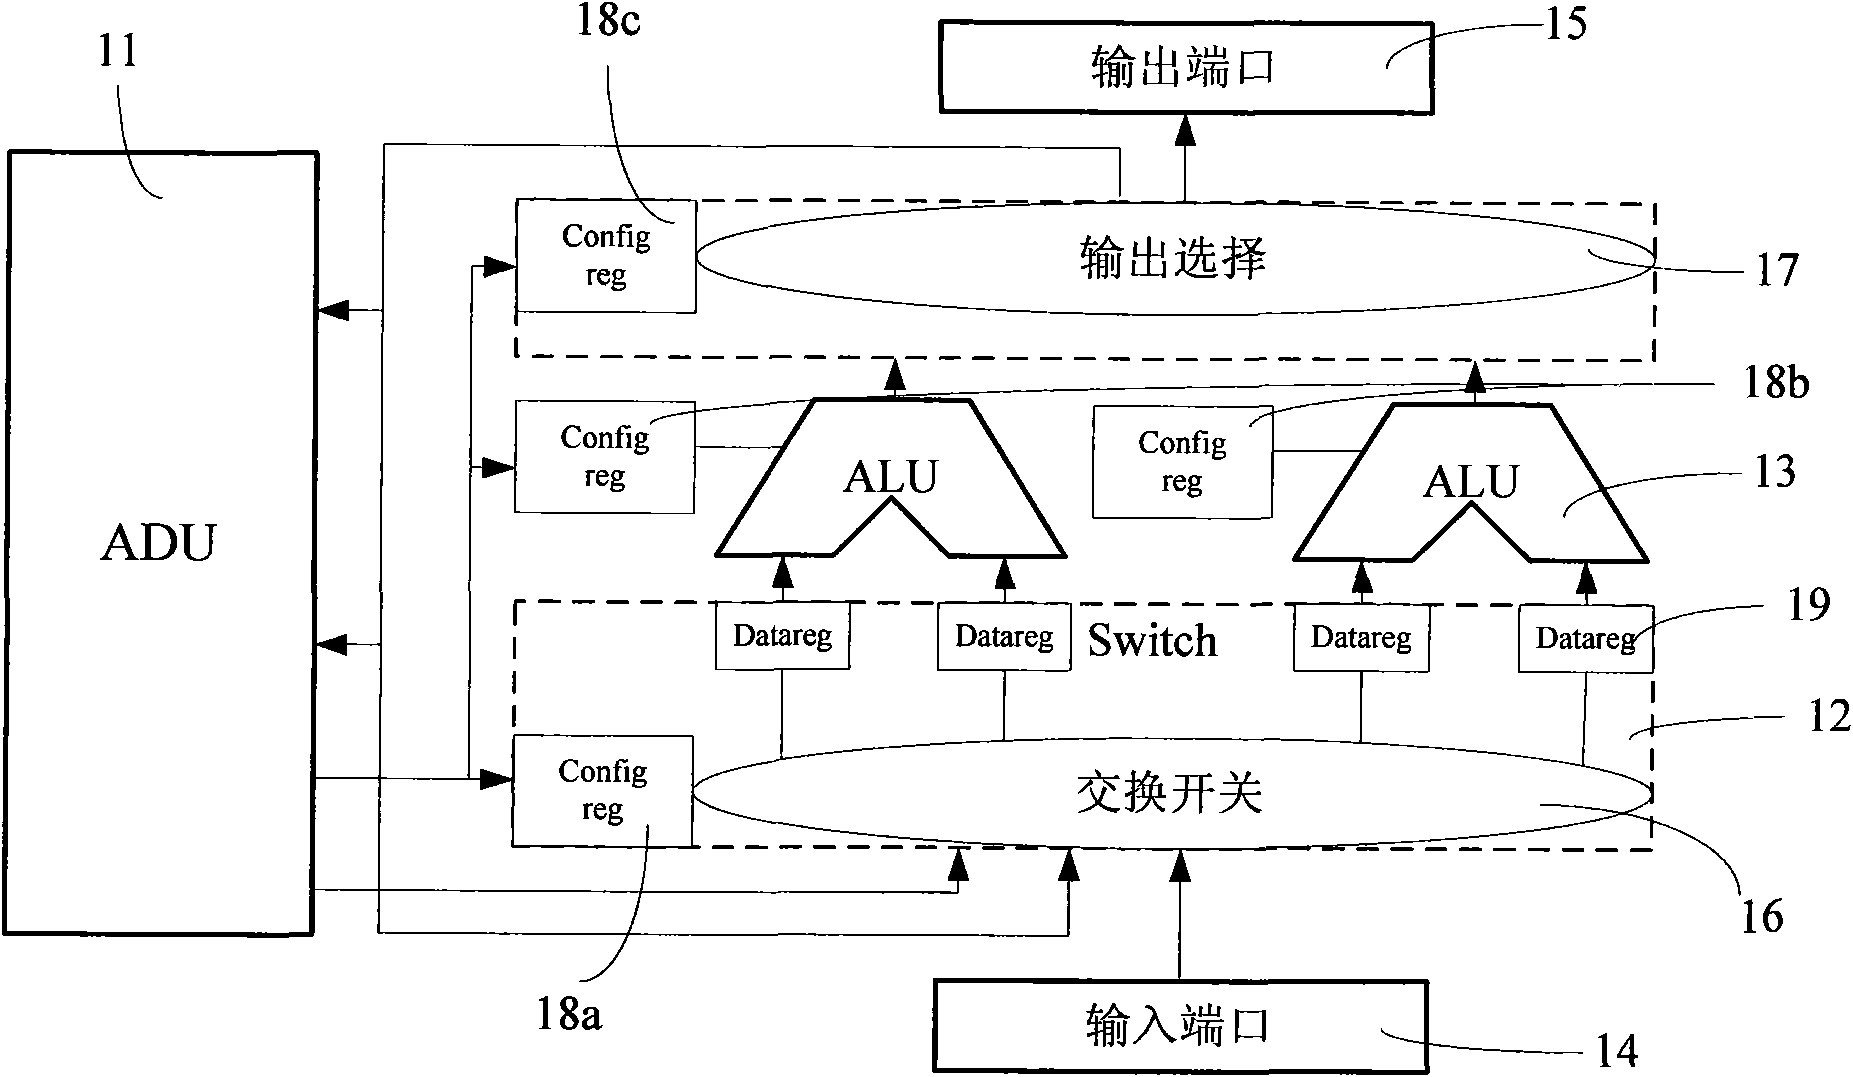 Processor structure